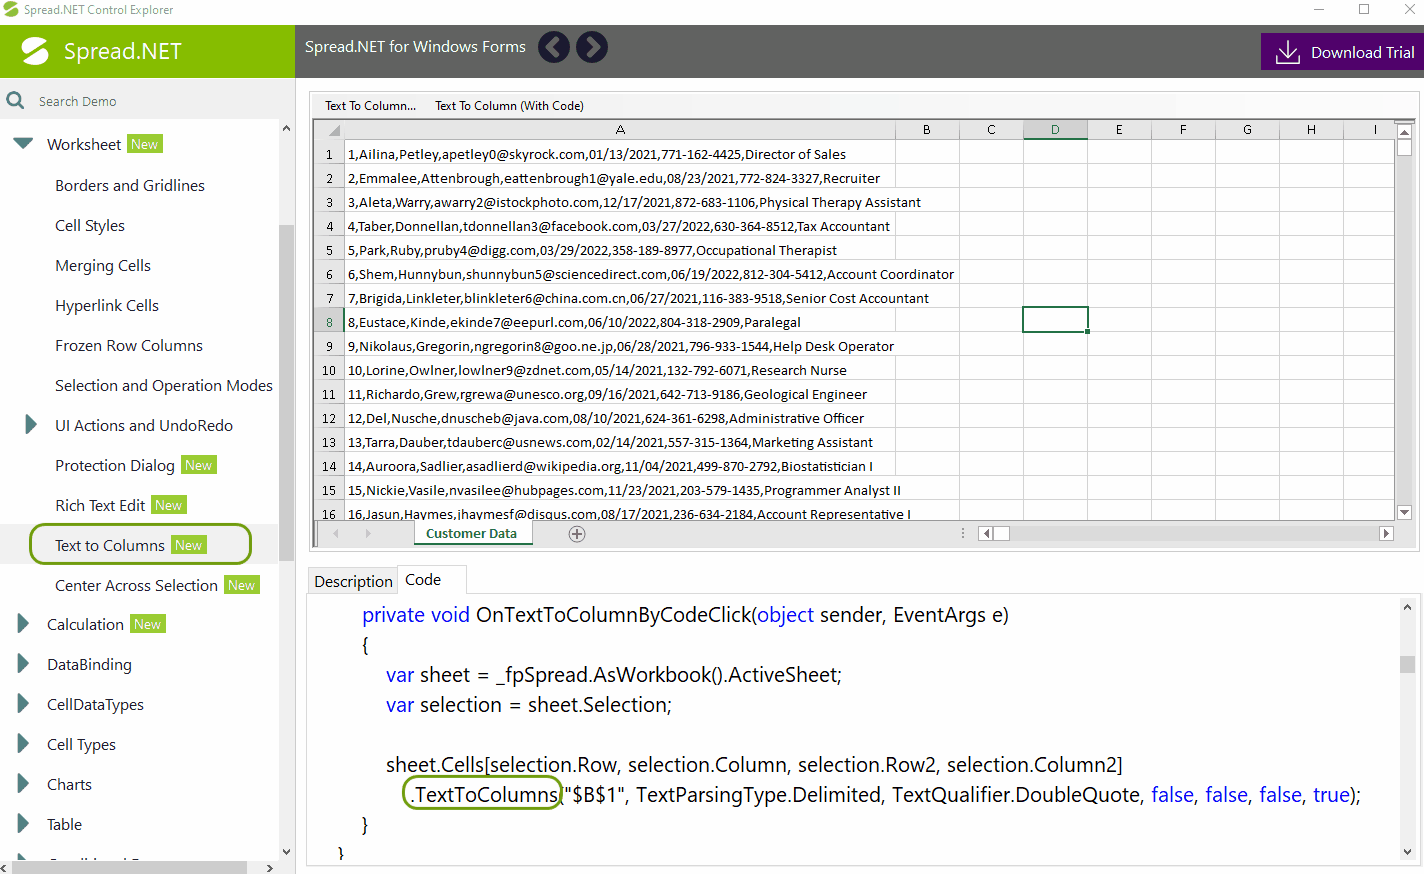 Using Spread.NET's Text to Columns method in C# code